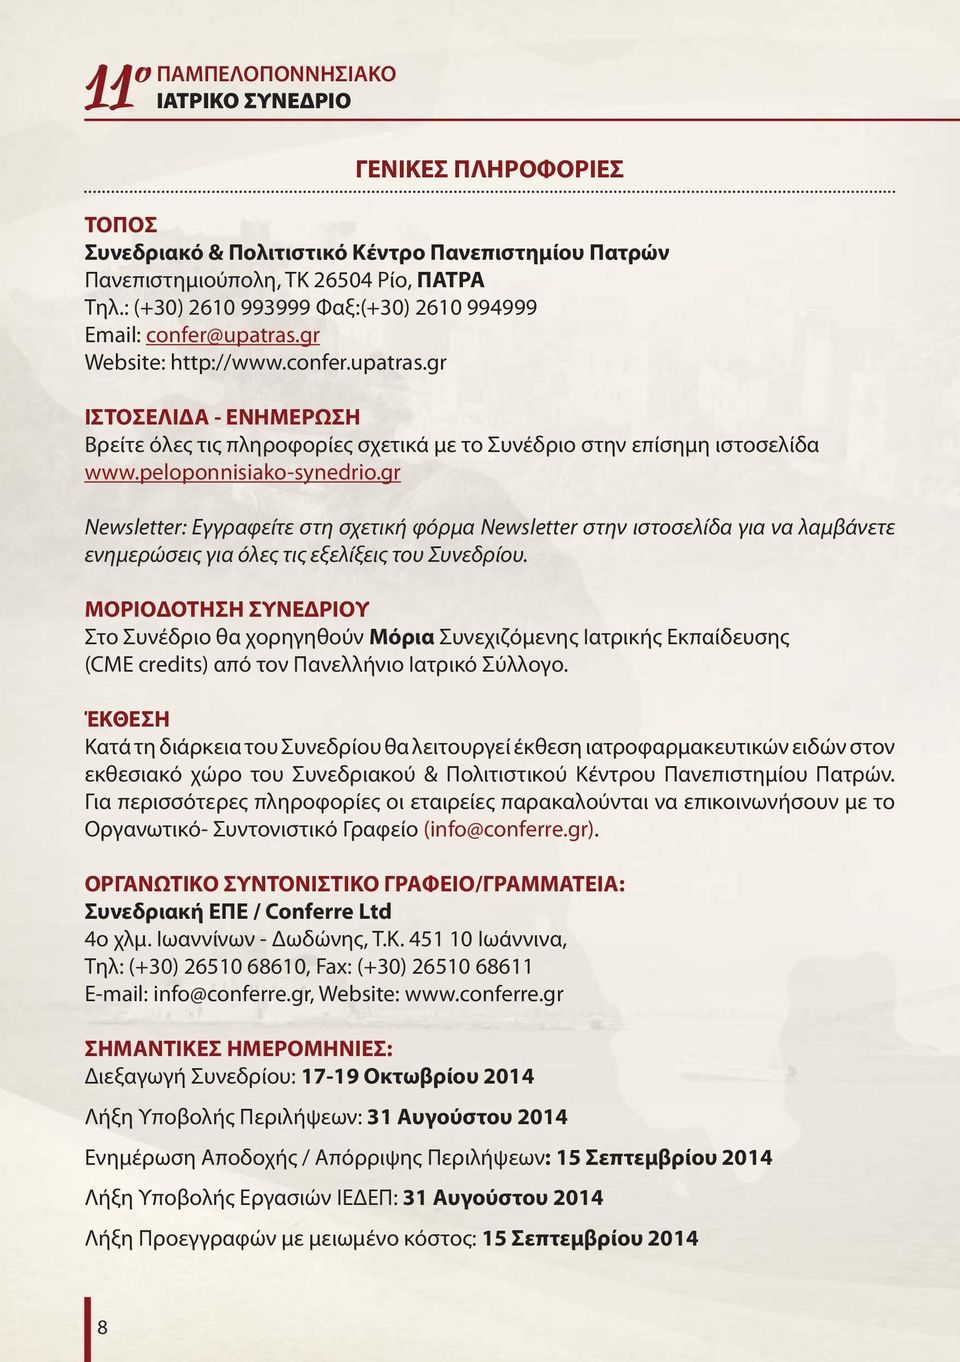 peloponnisiako-synedrio.gr Newsletter: Εγγραφείτε στη σχετική φόρμα Newsletter στην ιστοσελίδα για να λαμβάνετε ενημερώσεις για όλες τις εξελίξεις του Συνεδρίου.